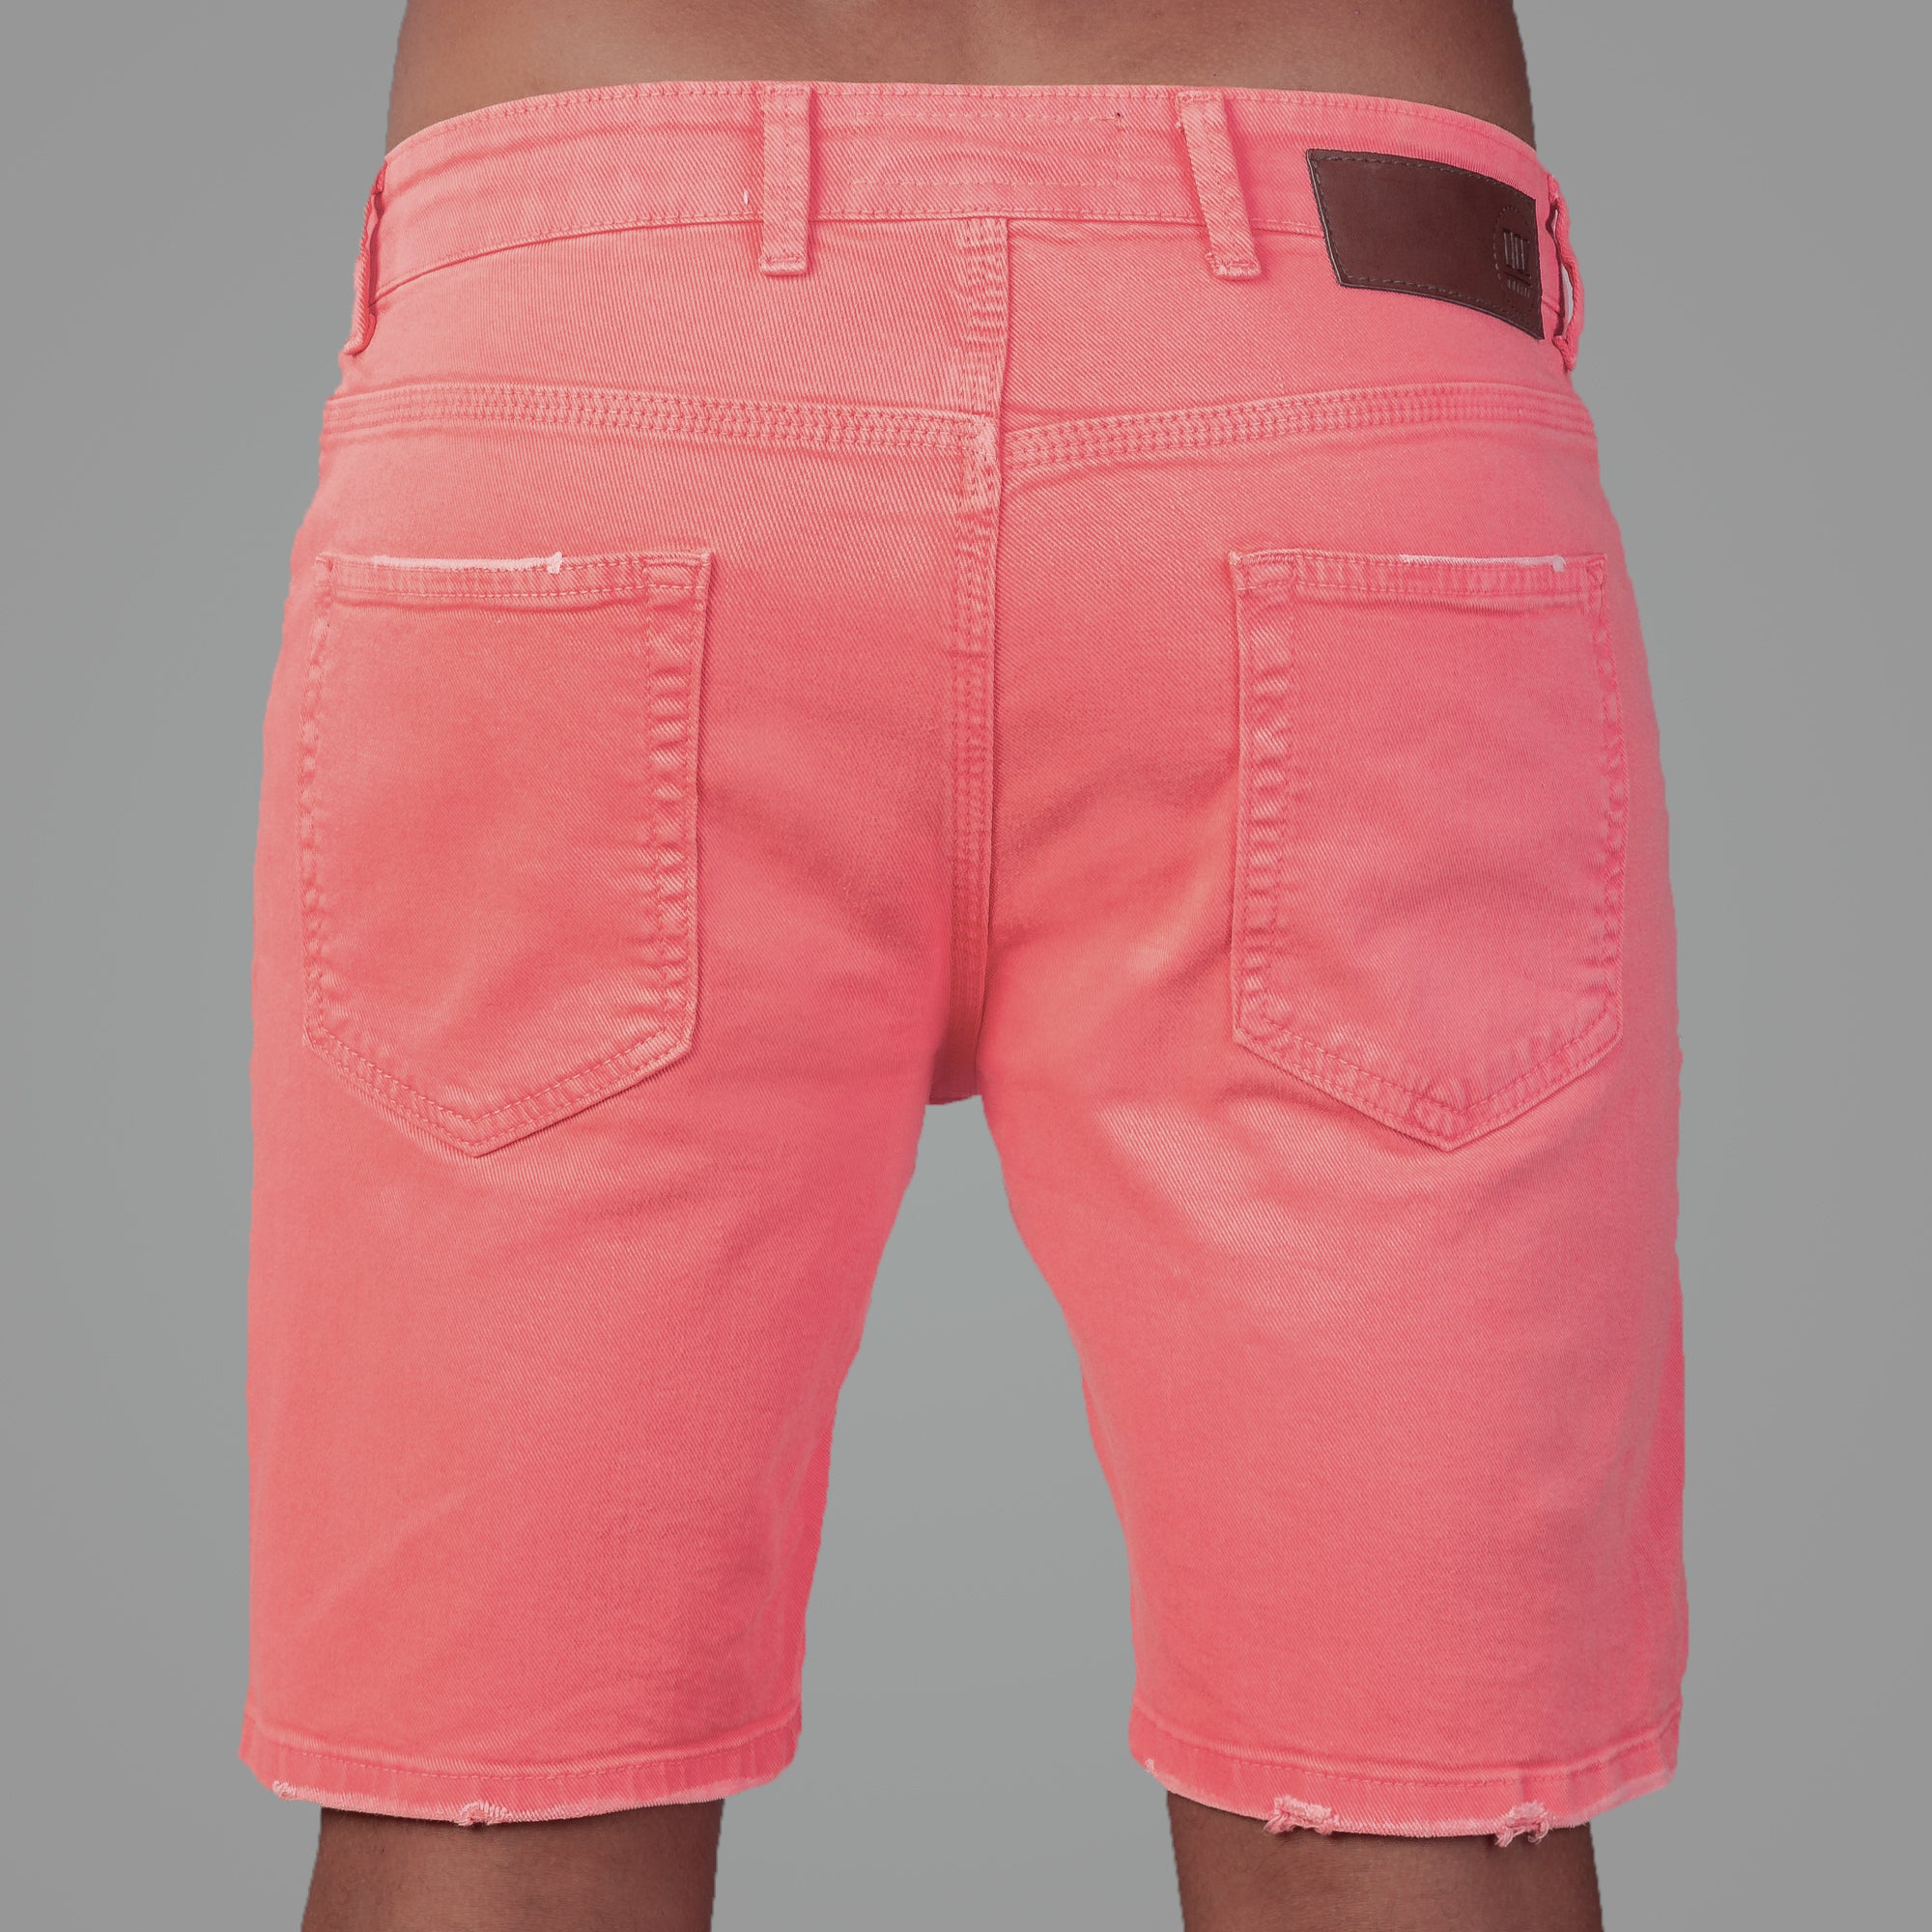 Pink Orange Jeans Shorts